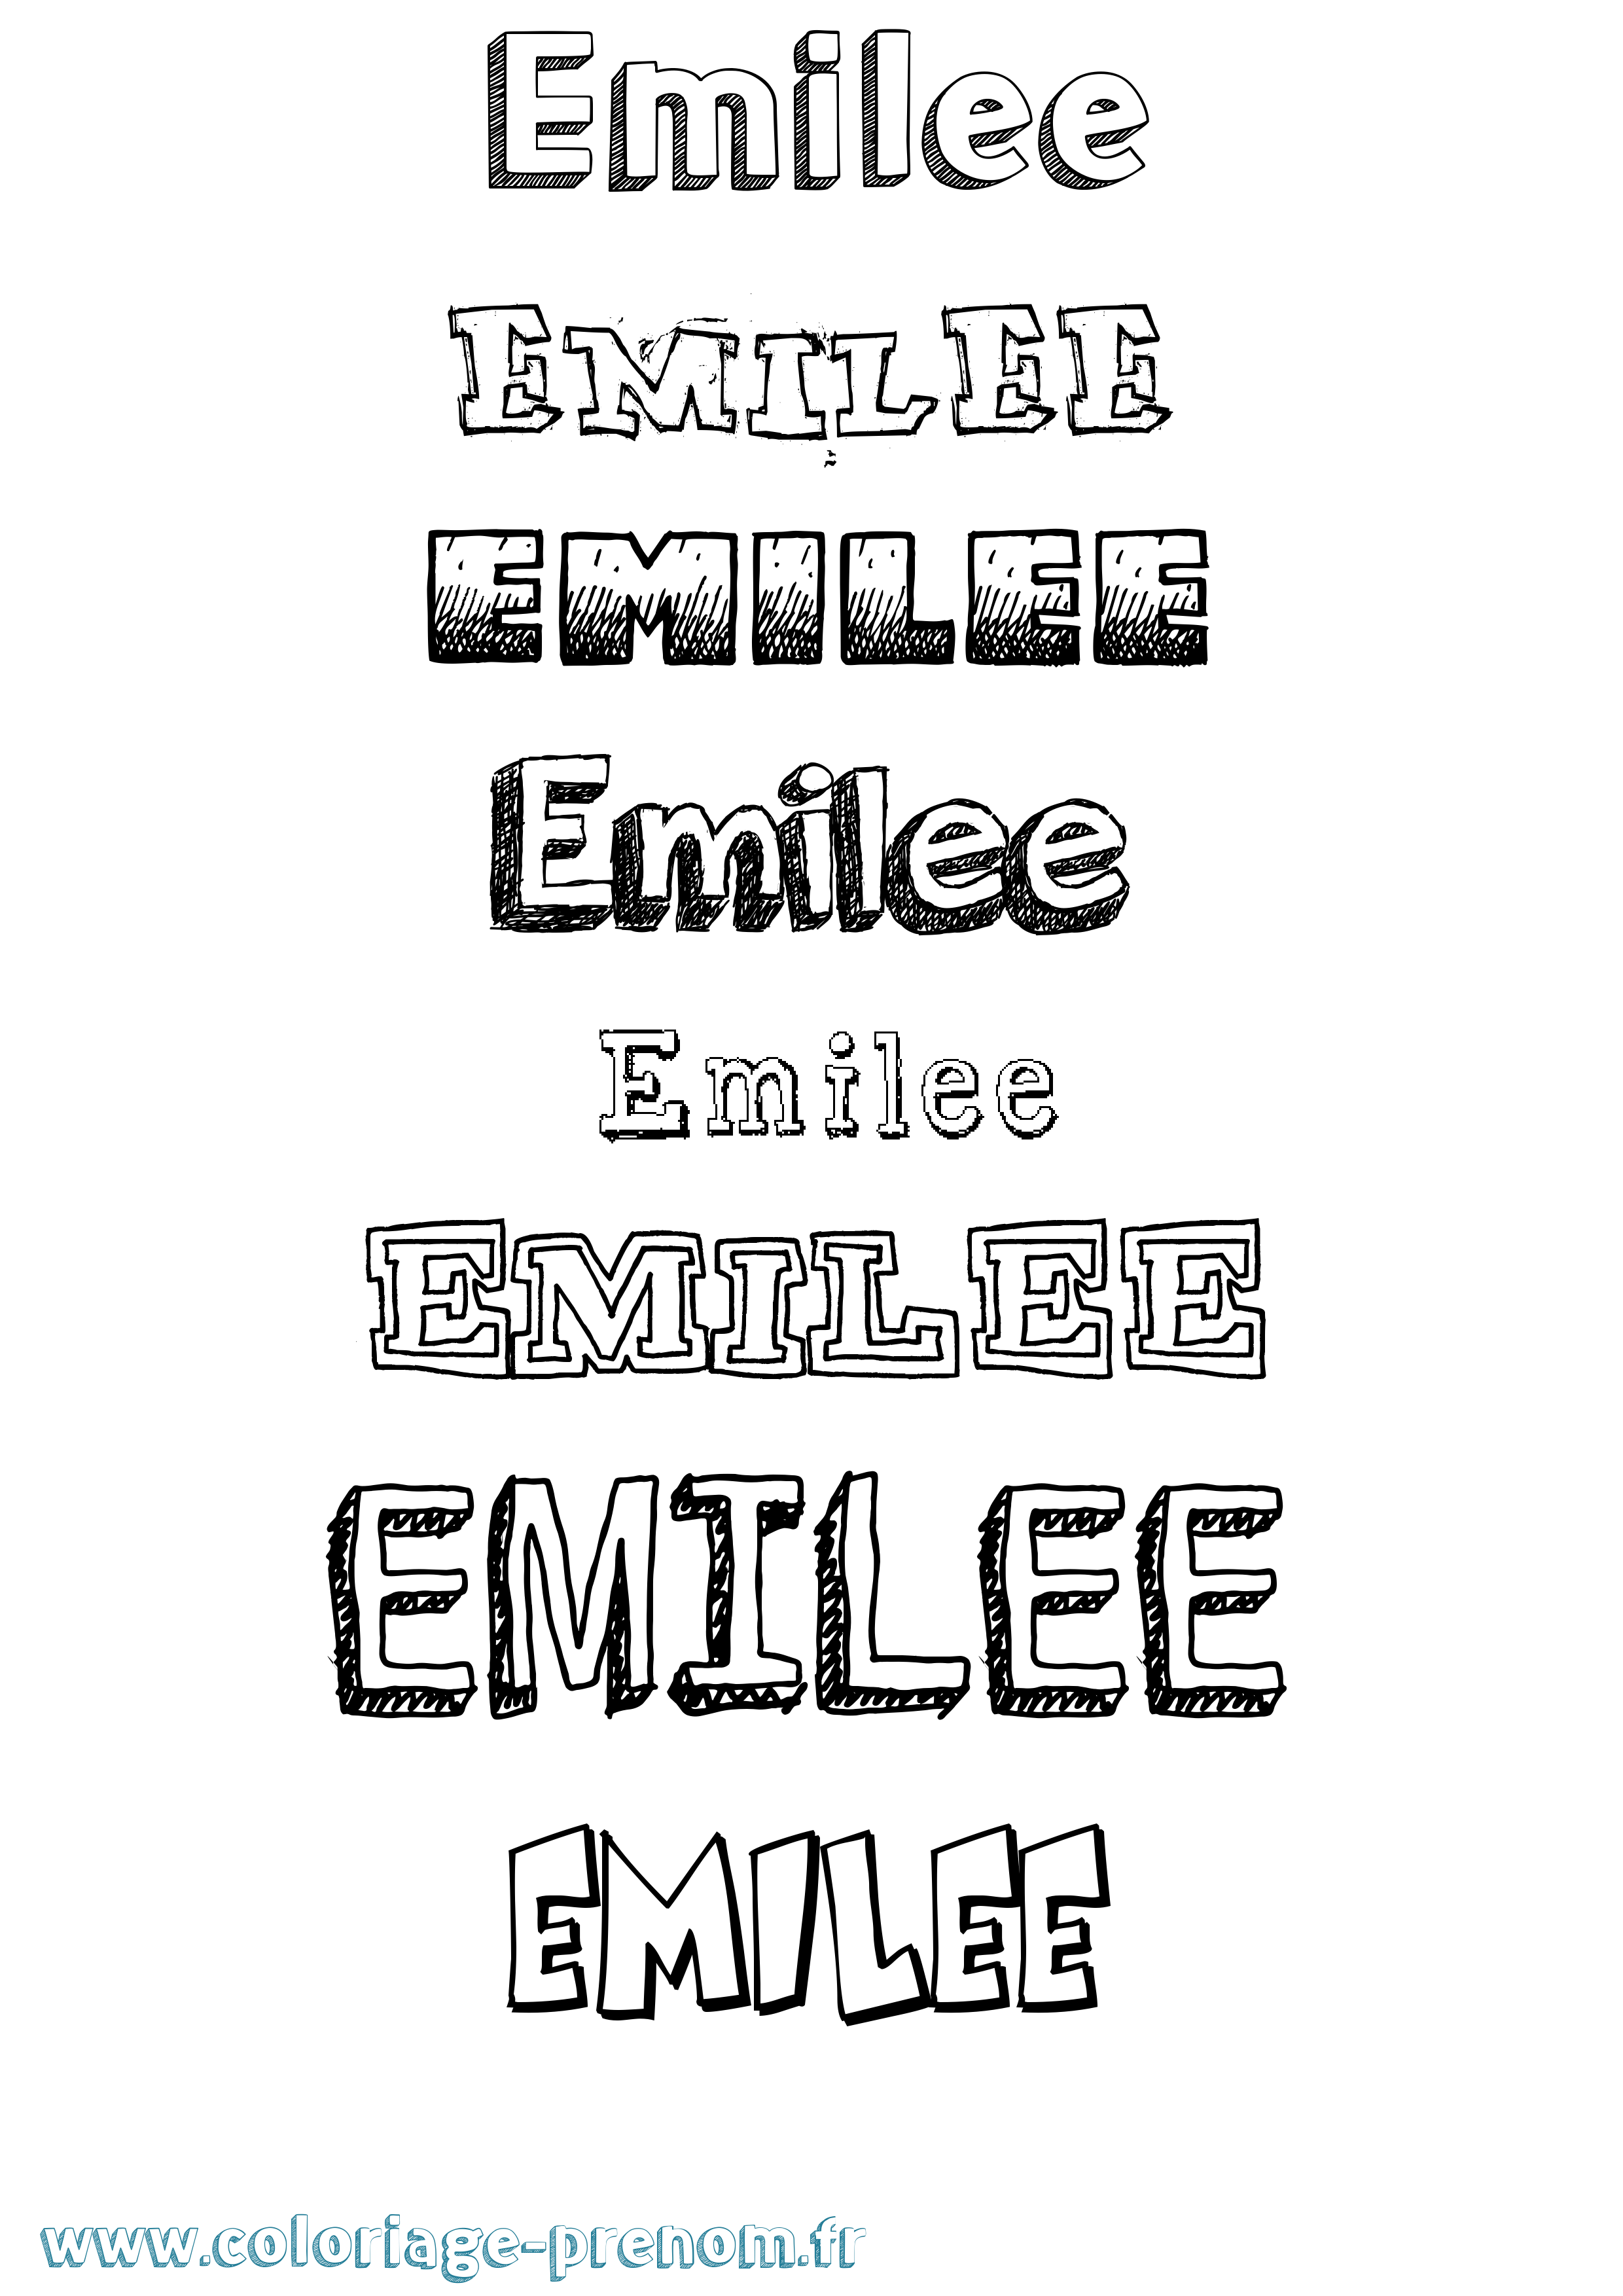 Coloriage prénom Emilee Dessiné